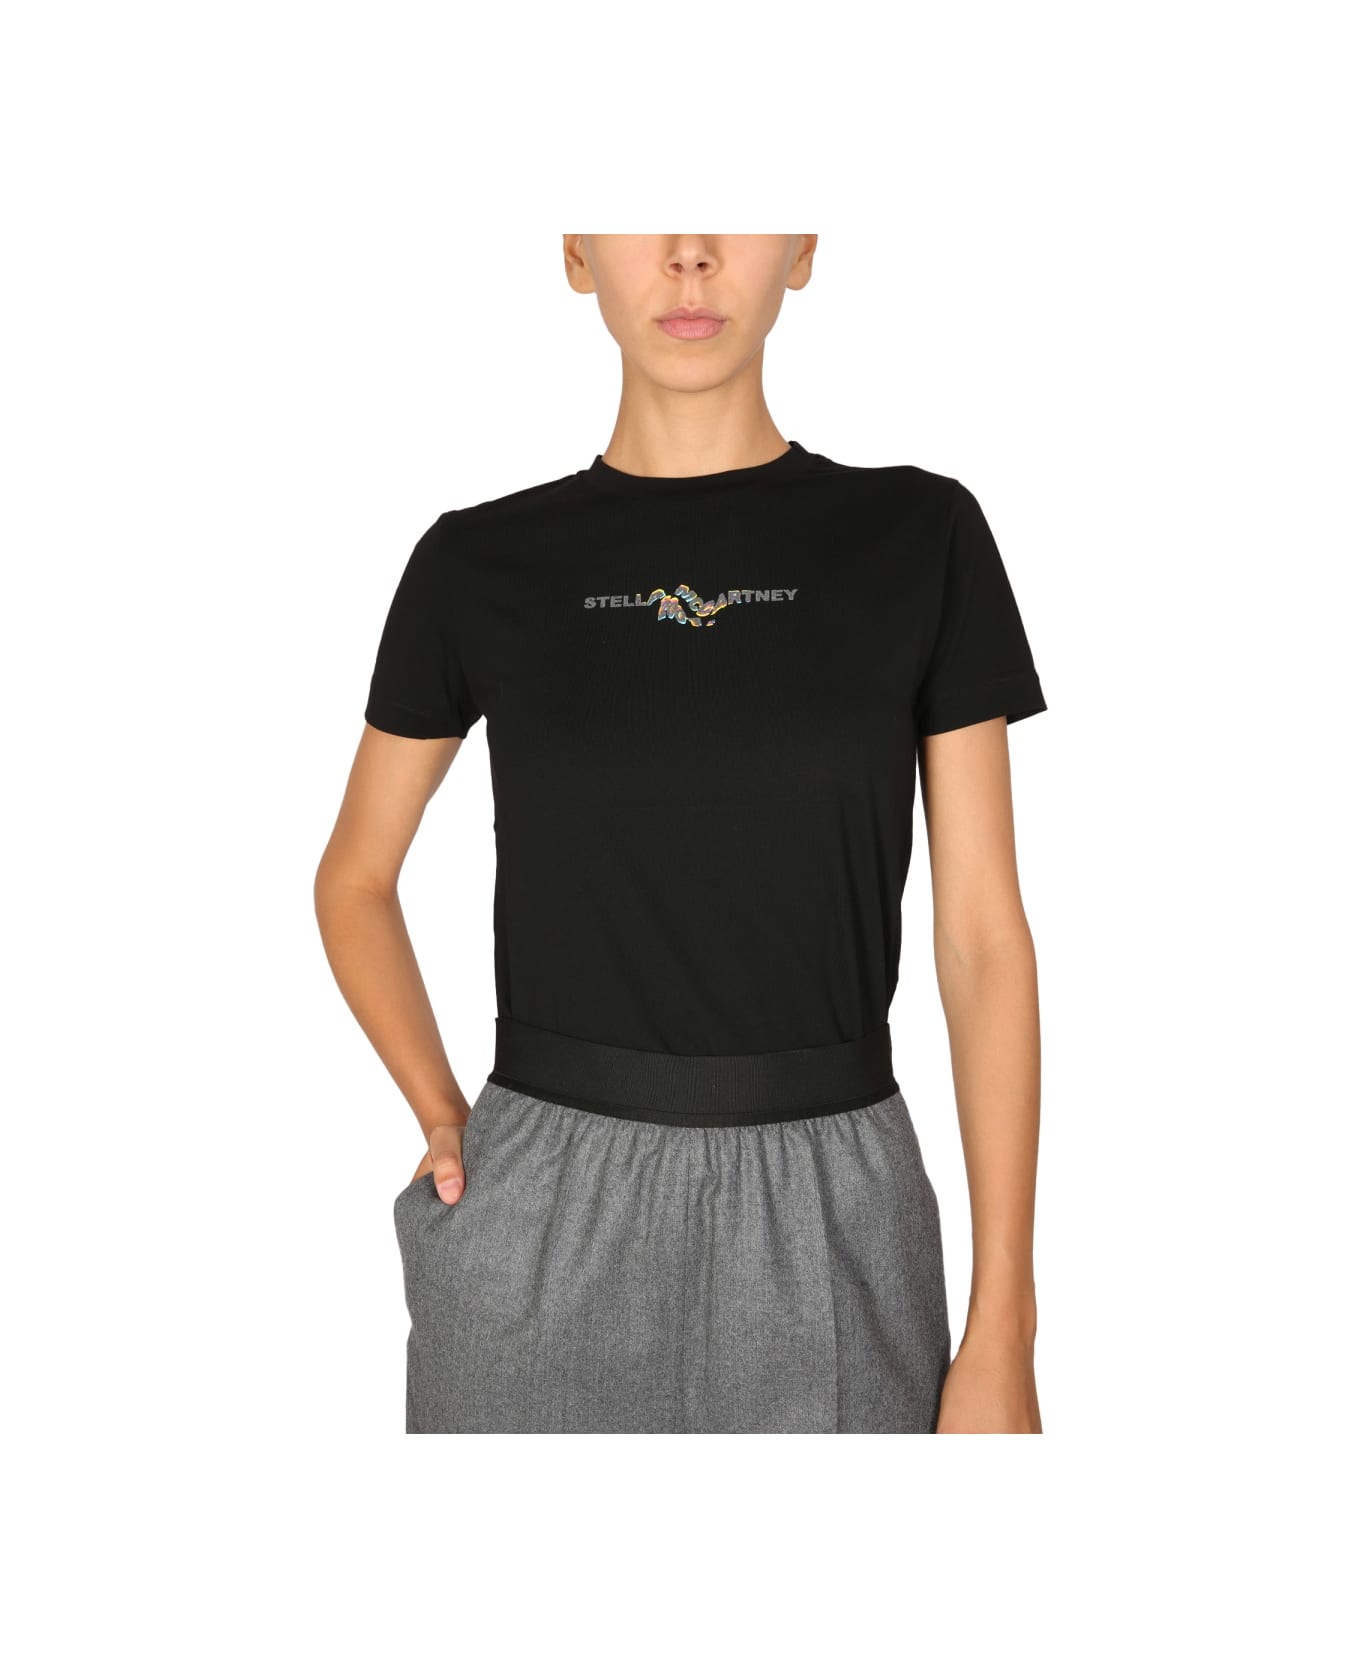 Stella McCartney T-shirt "glitch" - BLACK Tシャツ